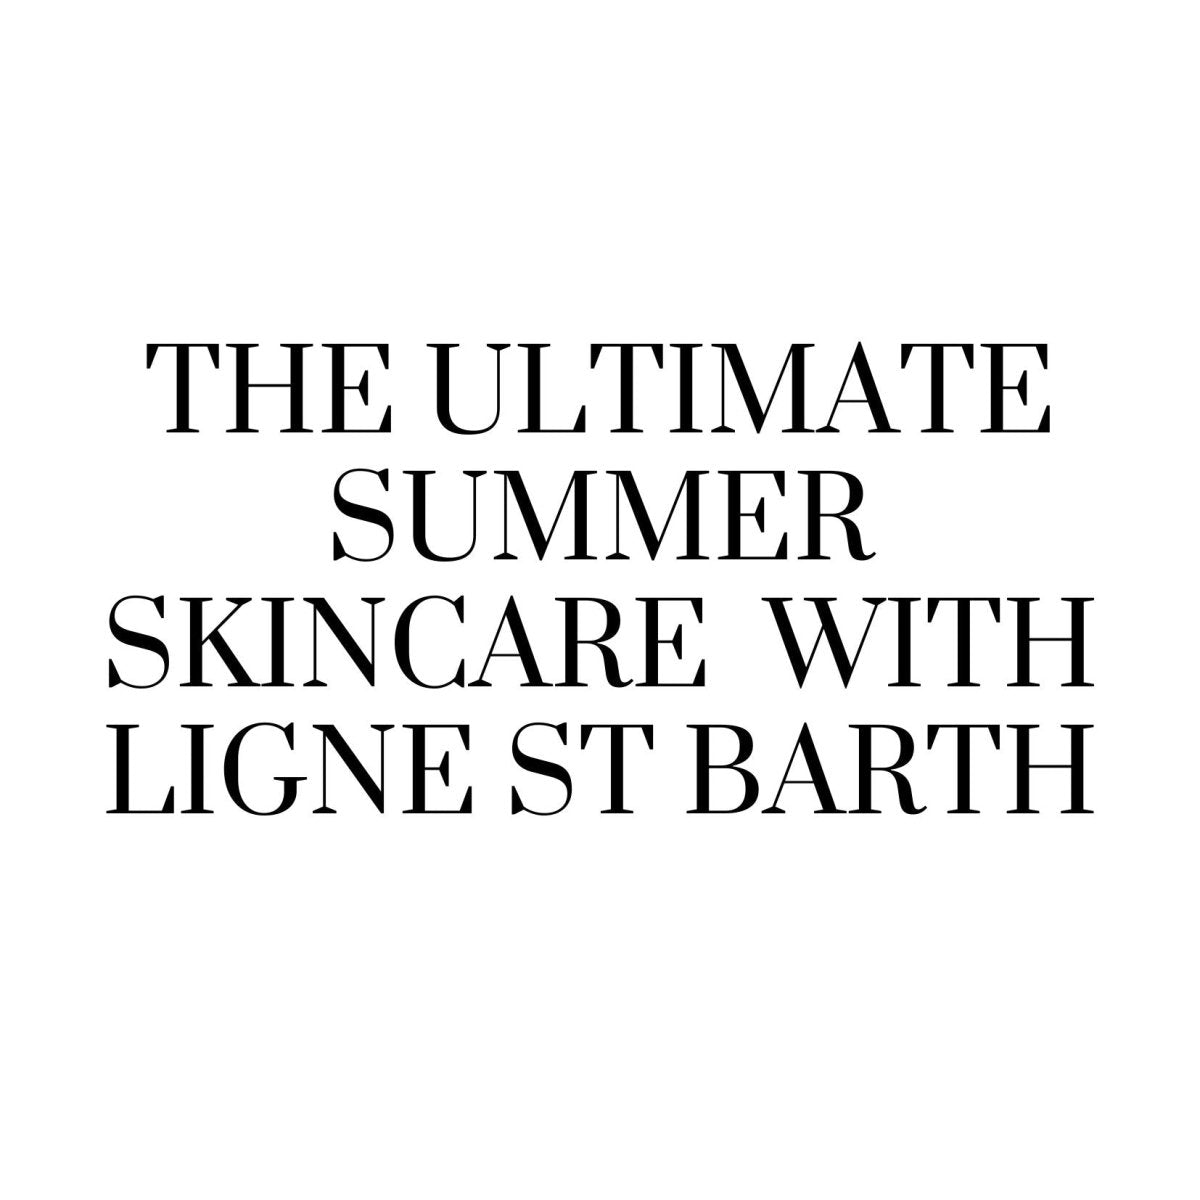 The Ultimate Summer Skincare Ligne St Barth